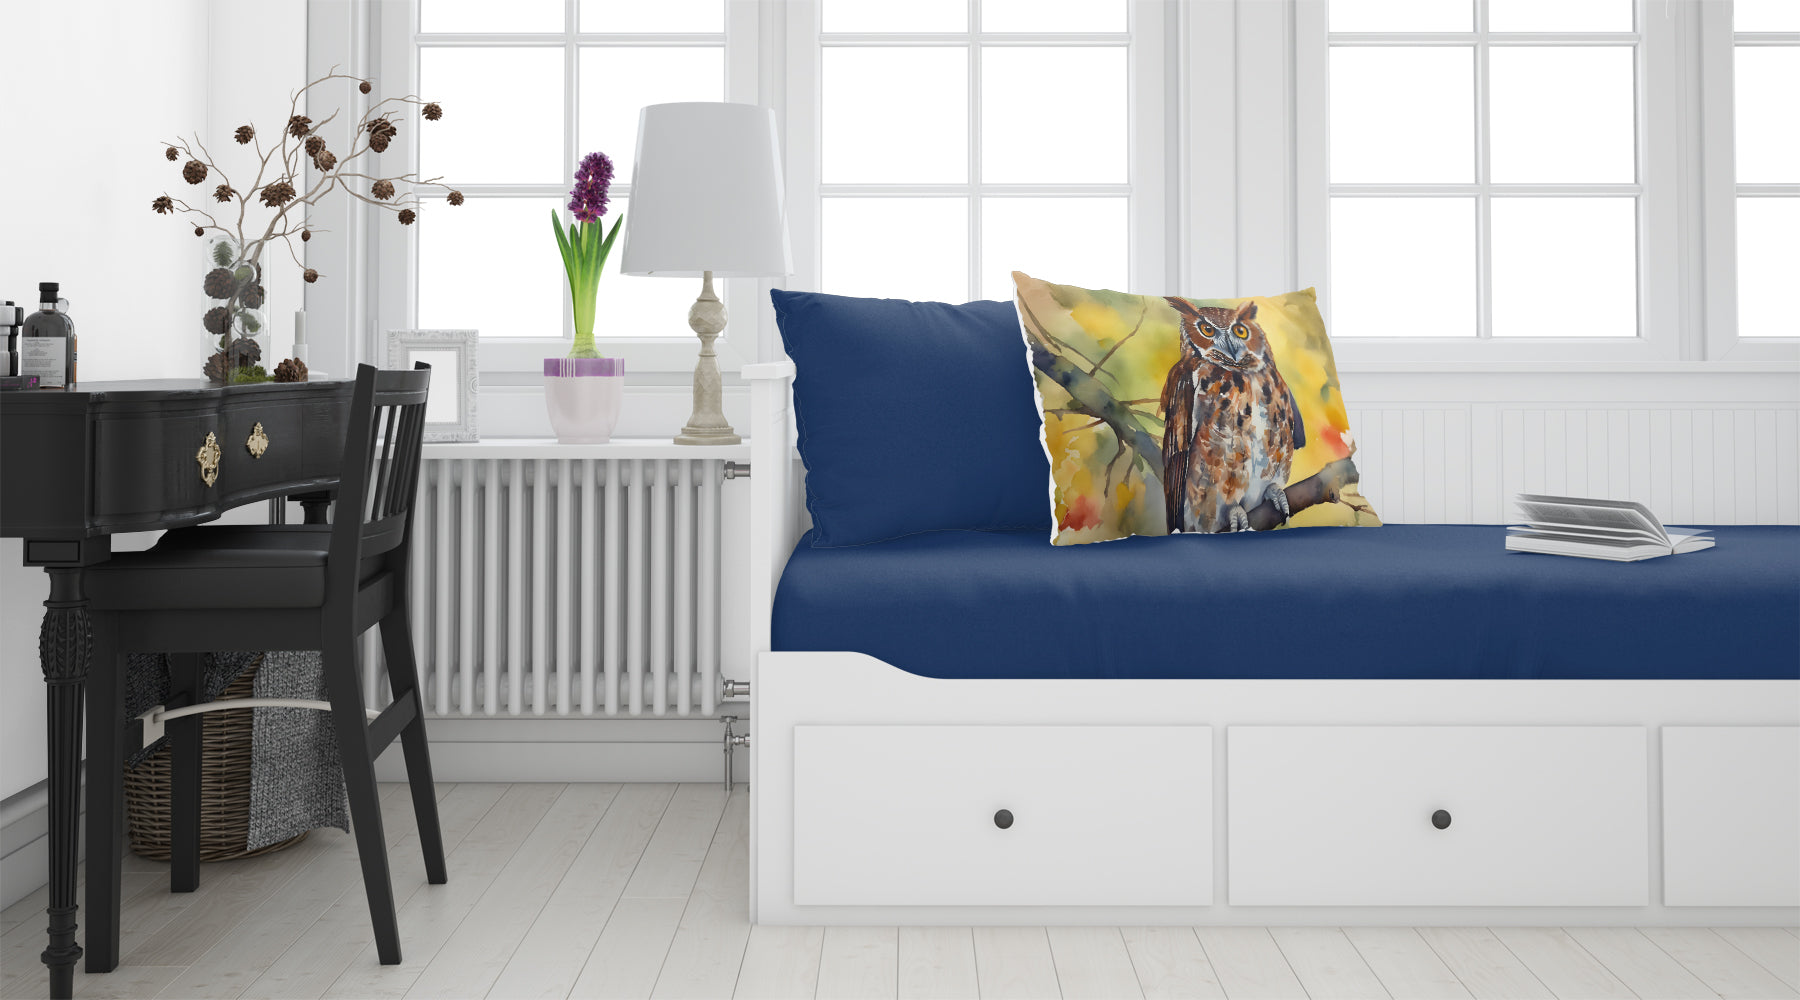 Buy this Eastern Screech Owl Standard Pillowcase